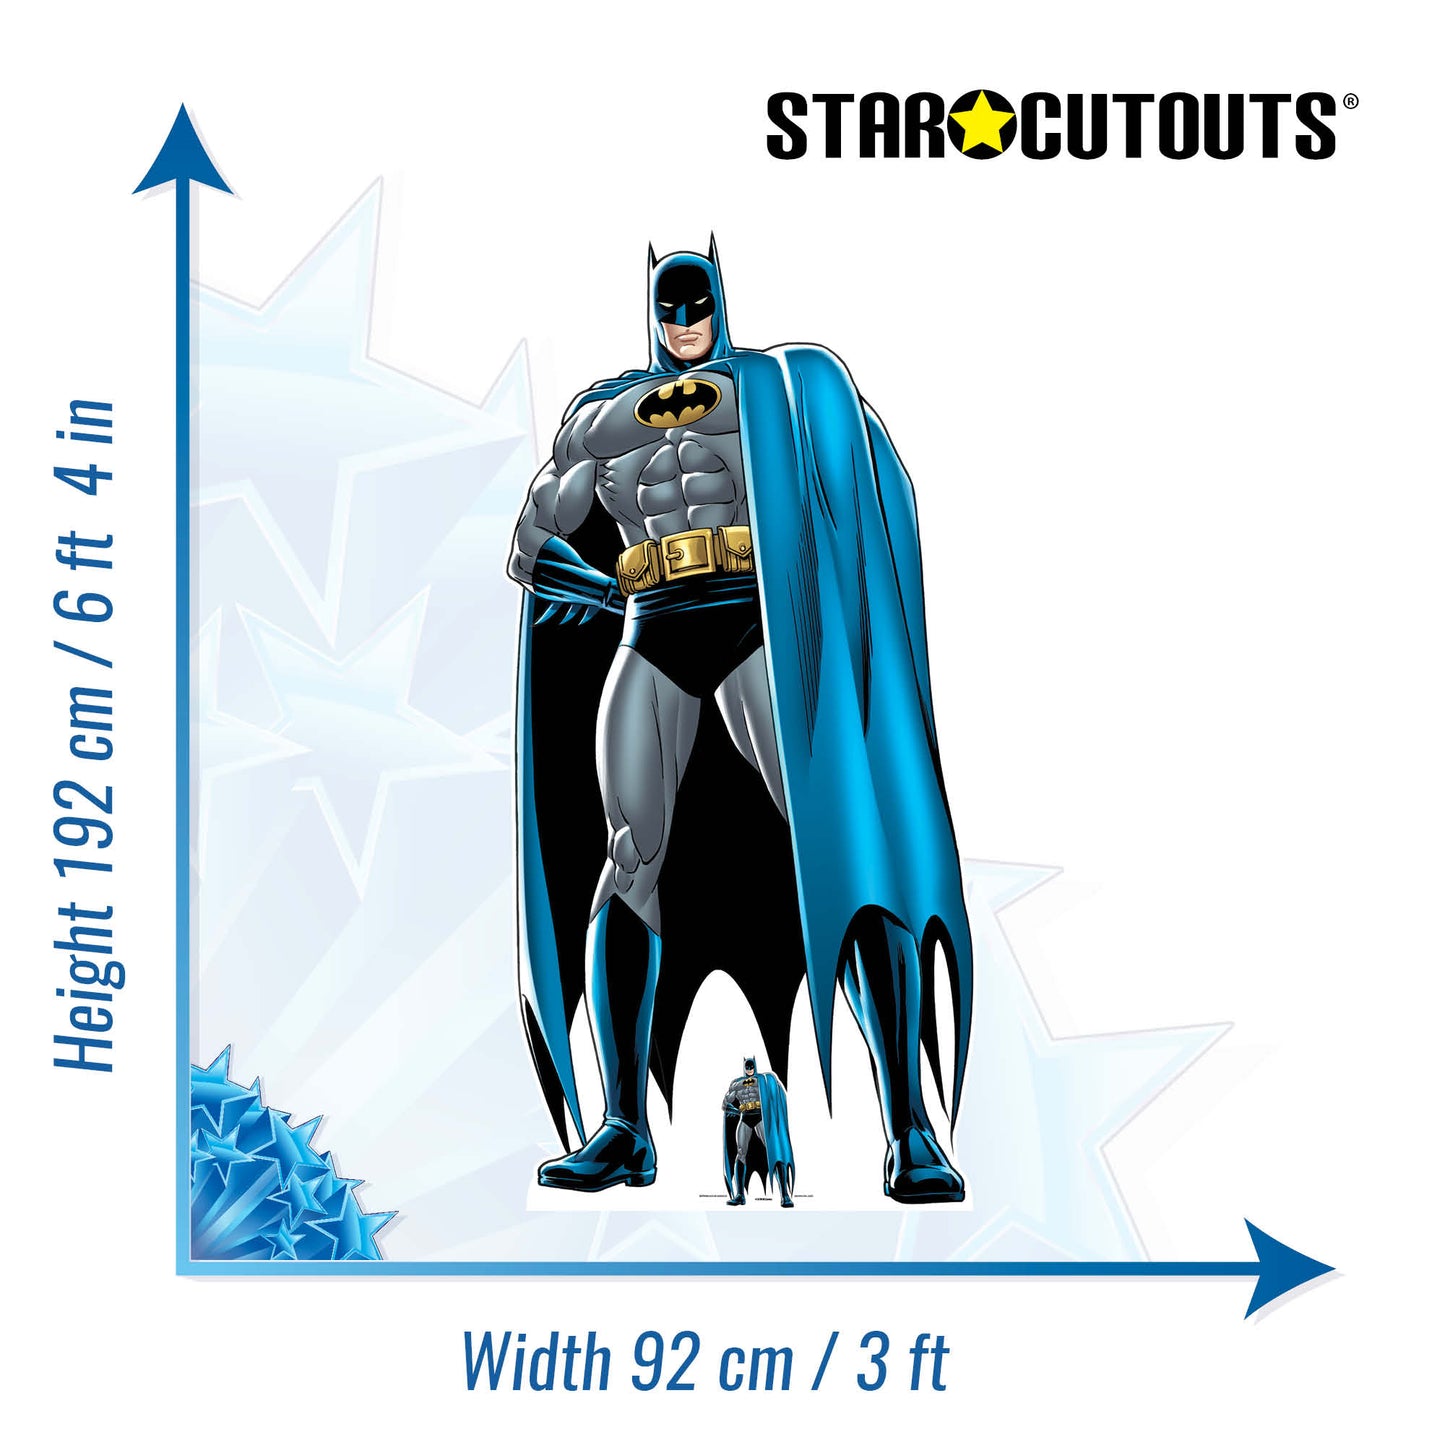 Batman Comic Style Cape Cardboard Cutout